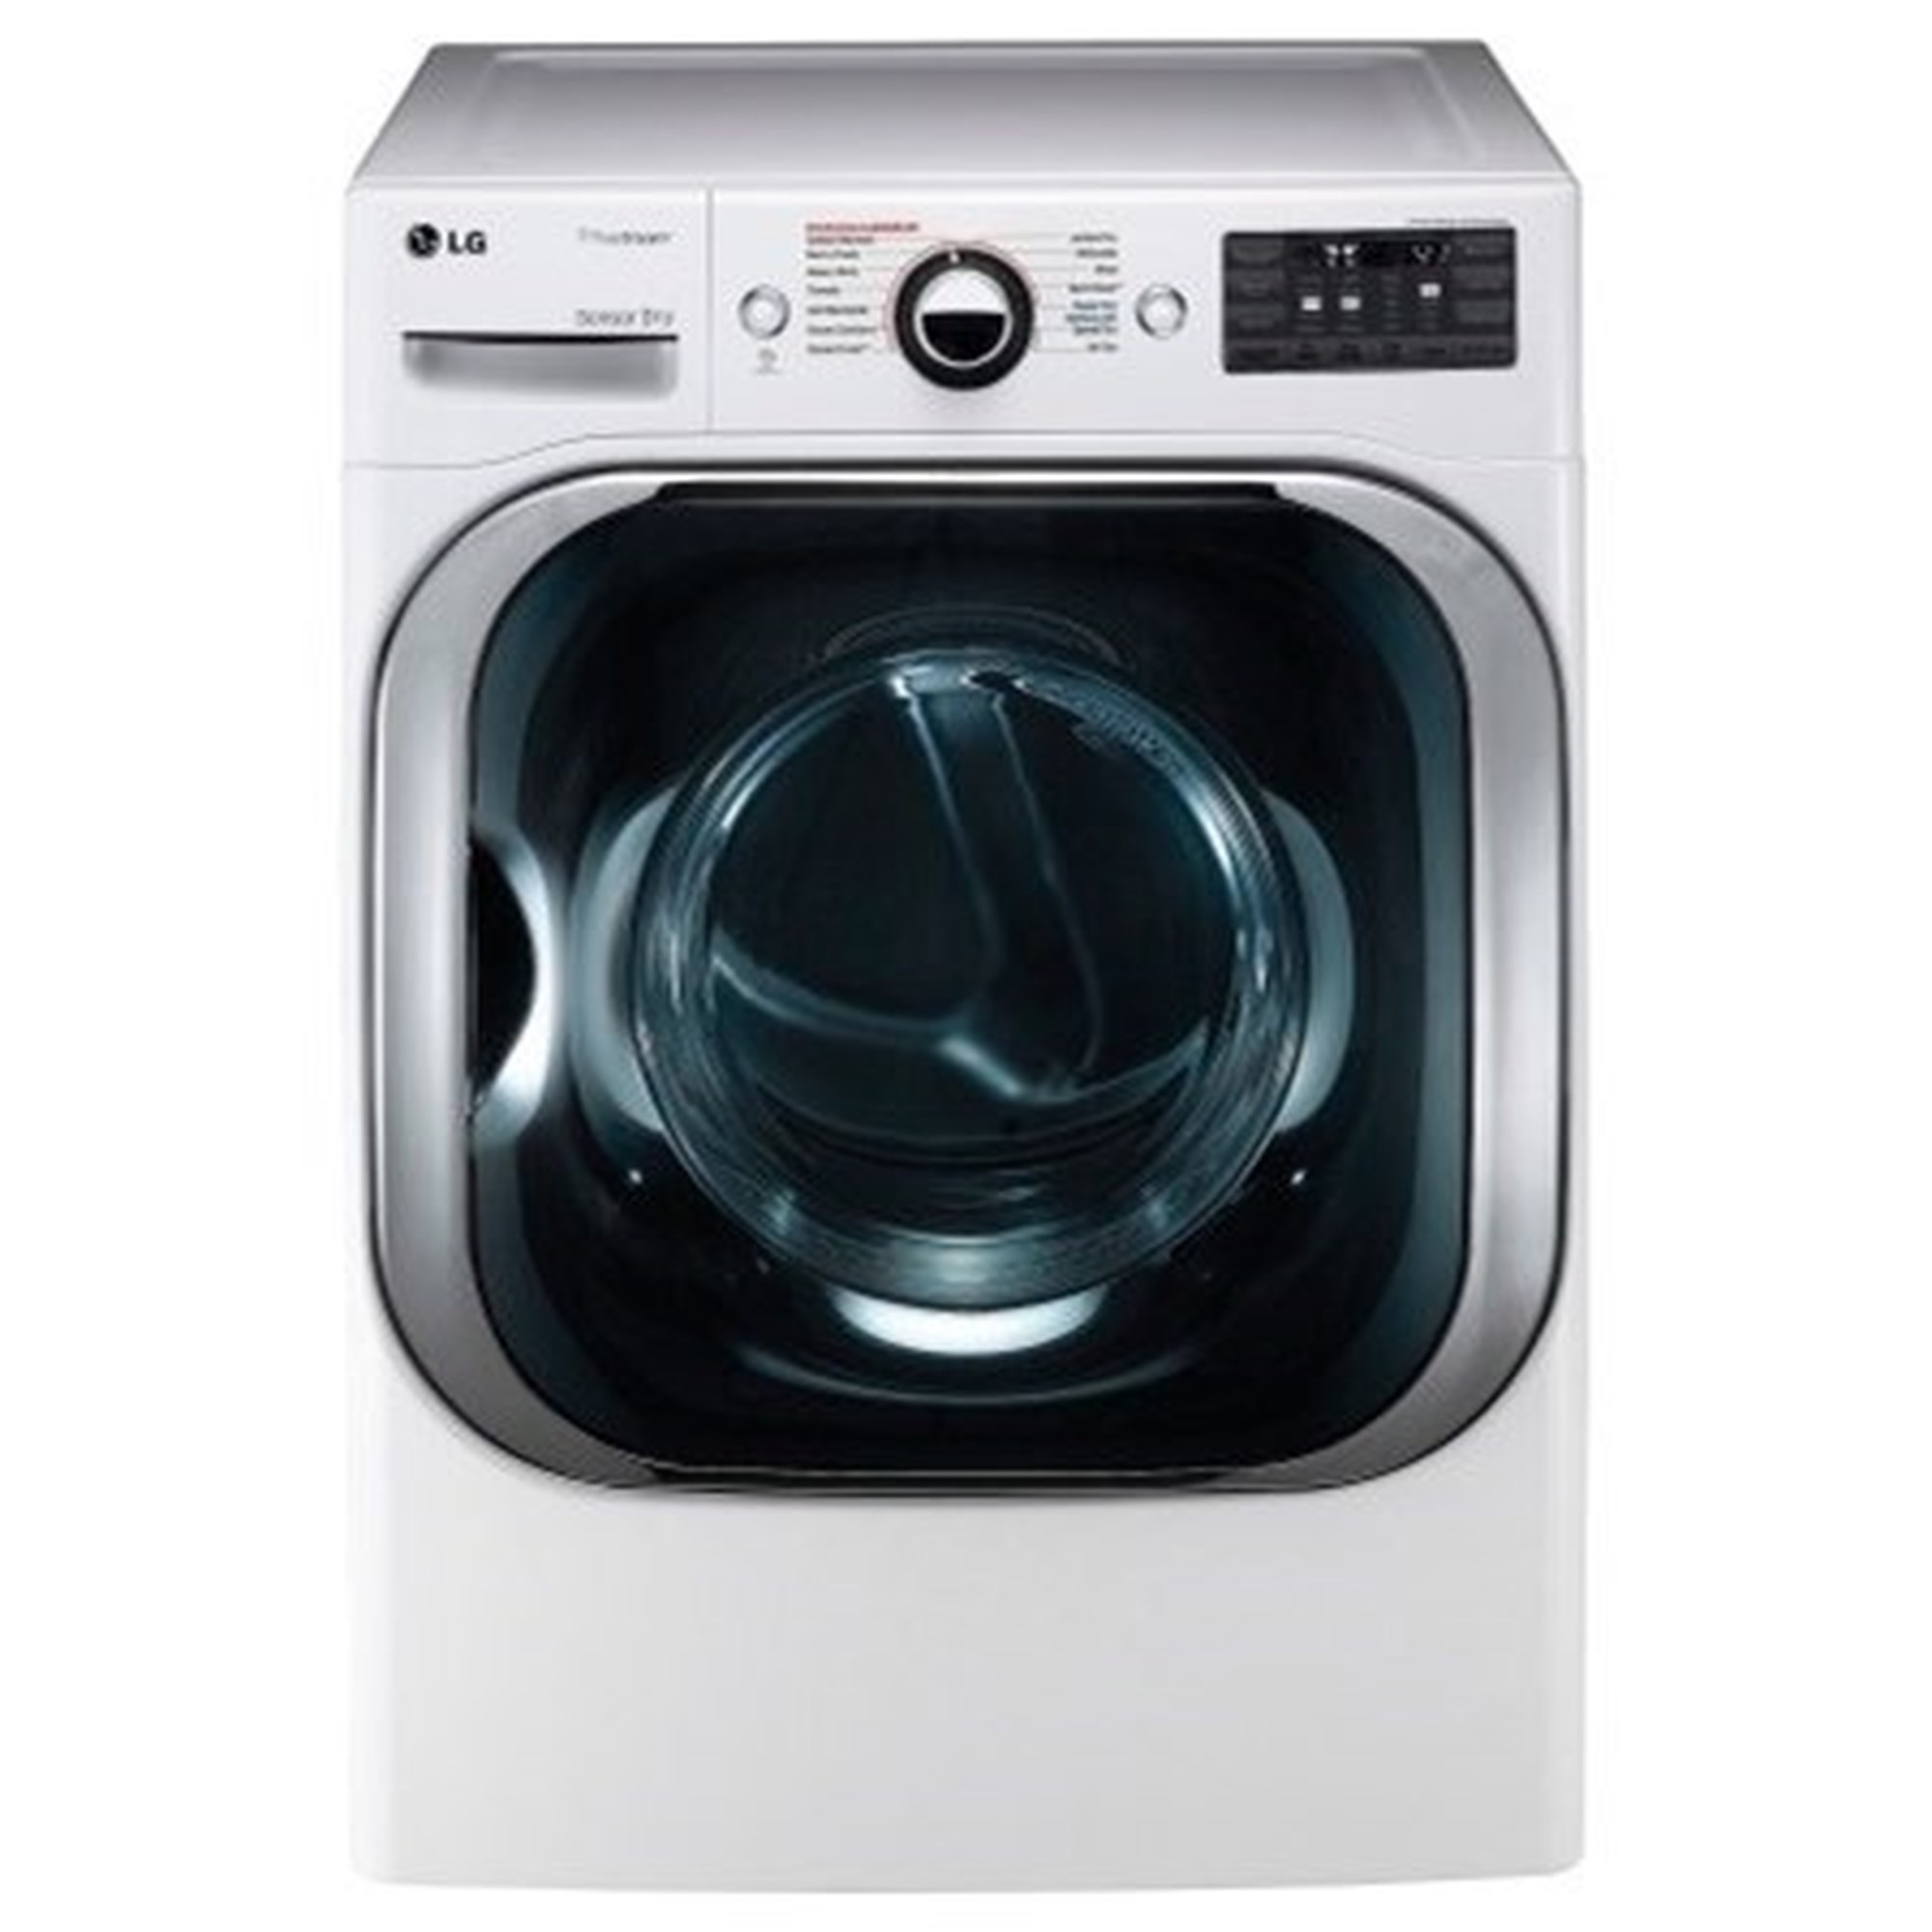 LG DLEX3370W 7.4 Cu. Ft. Ultra Large Capacity Steam Dryer